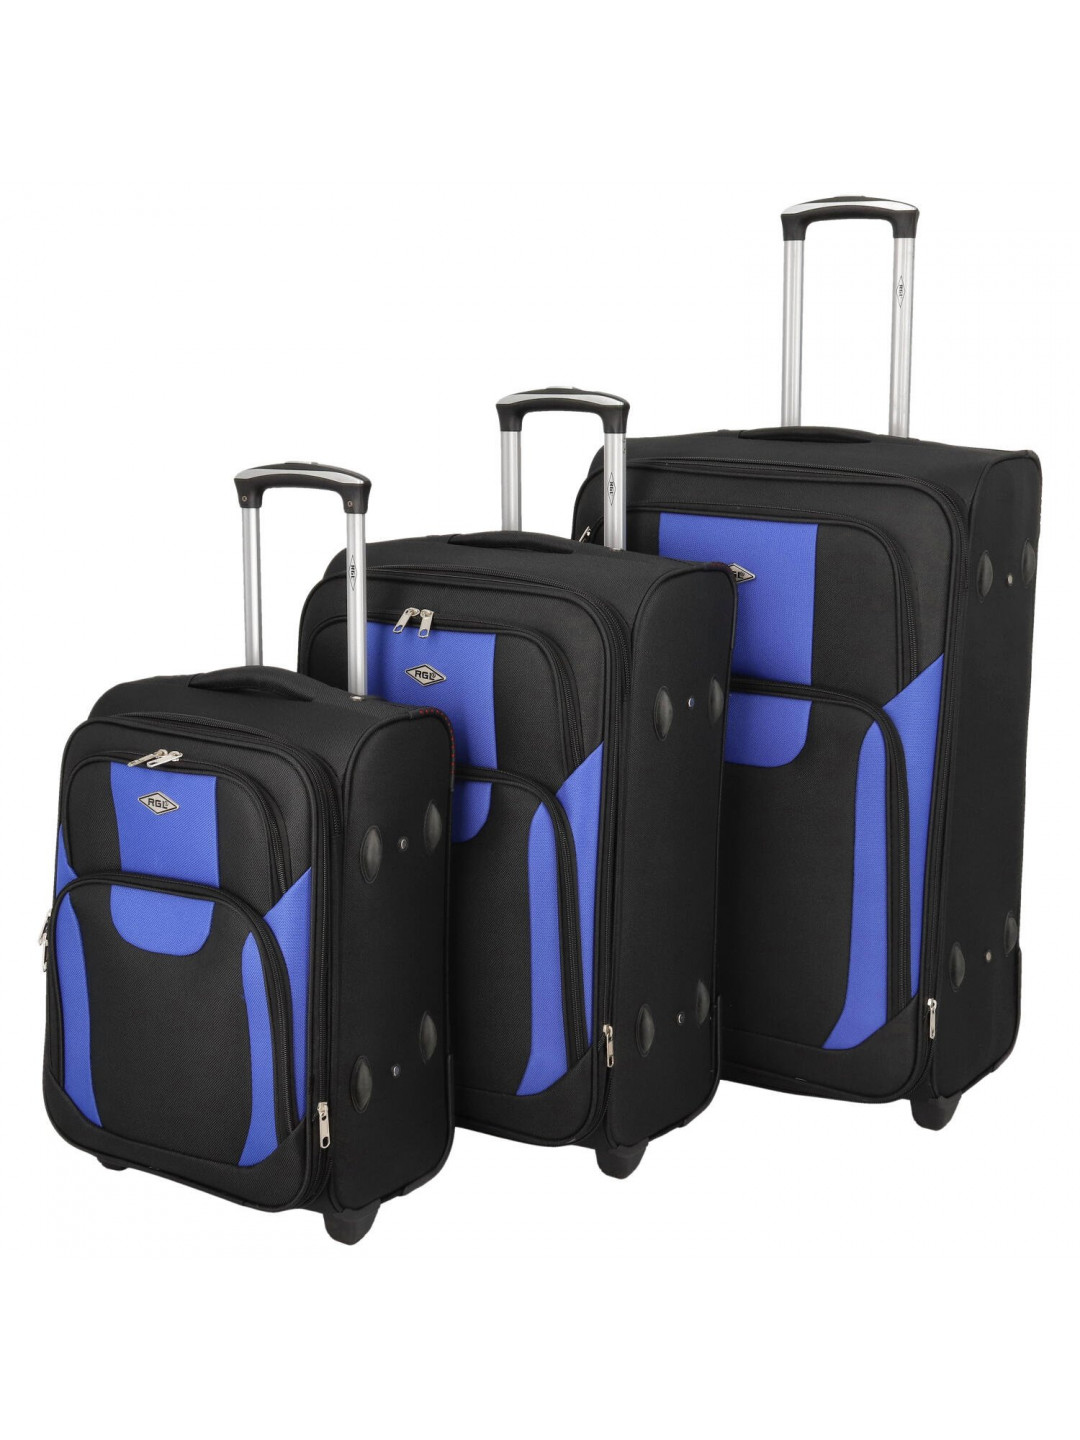 Cestovní kufr Asie SADA černá-modrá